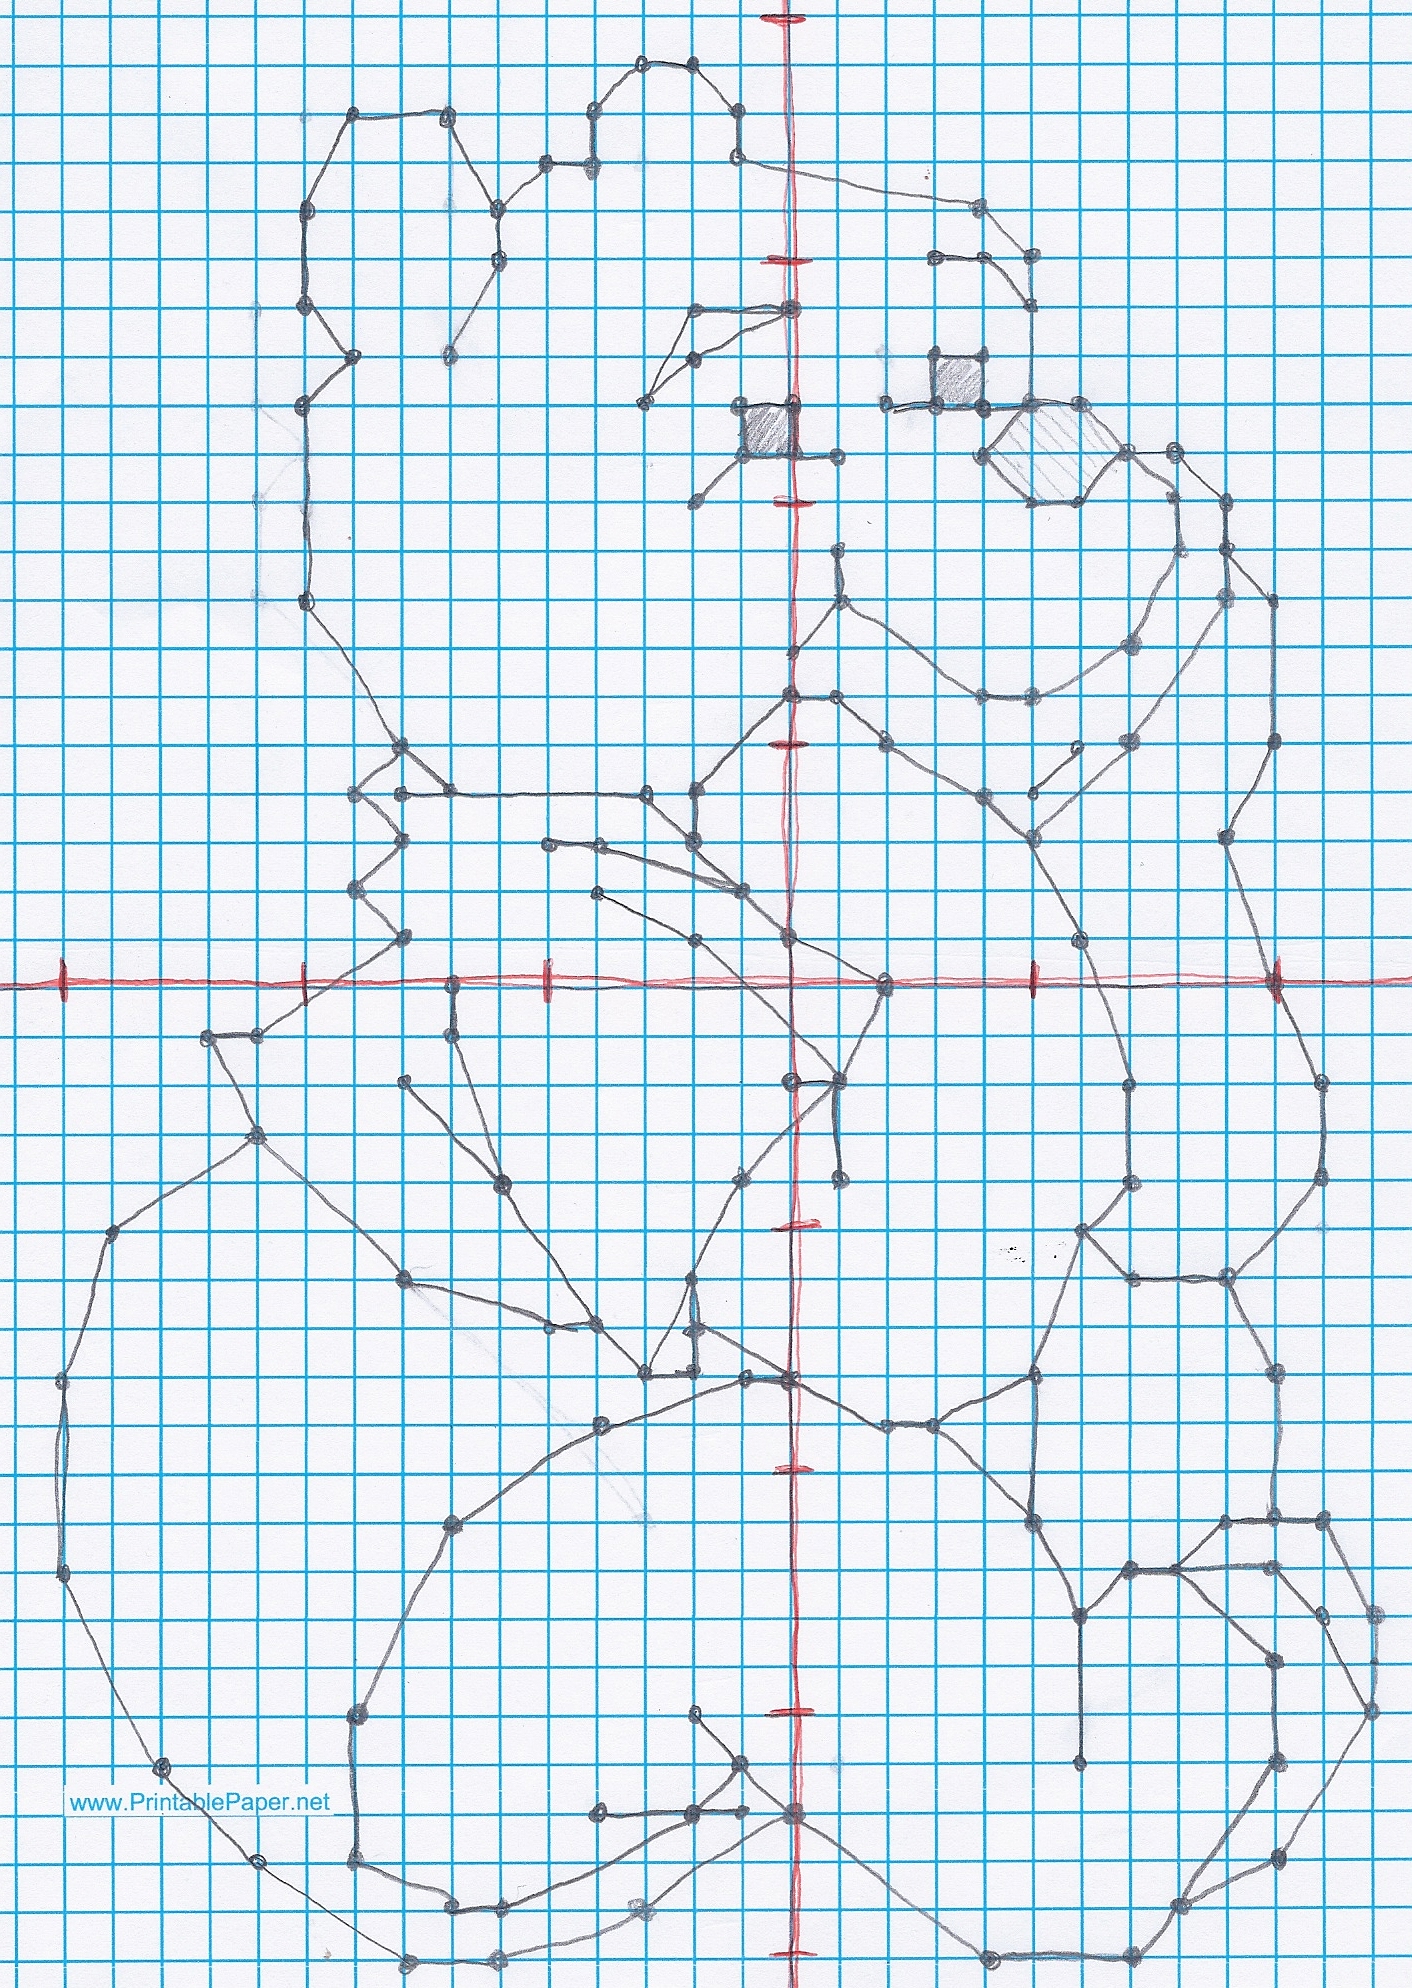 easy-grid-drawing-worksheets-at-getdrawings-free-download